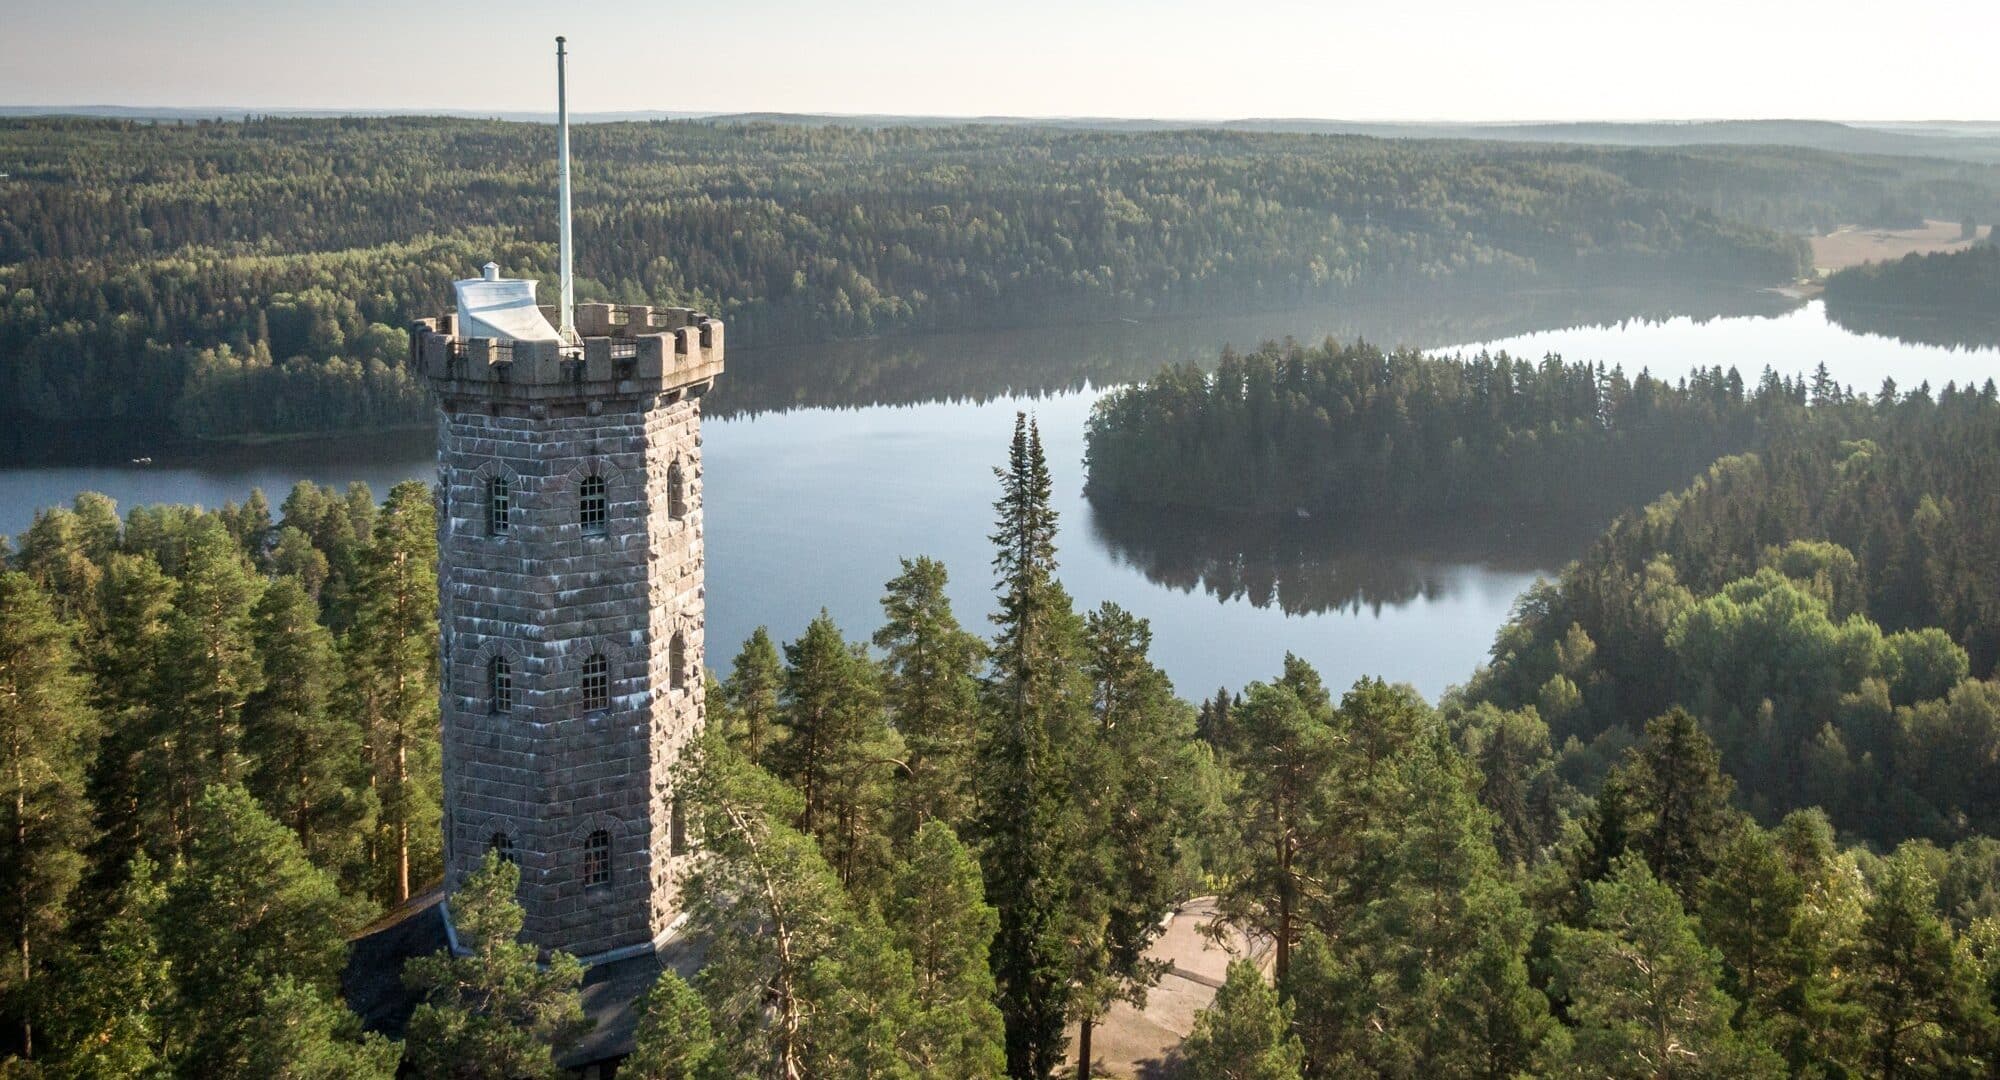 Aulanko Nature Reserve Hämeenlinnan region